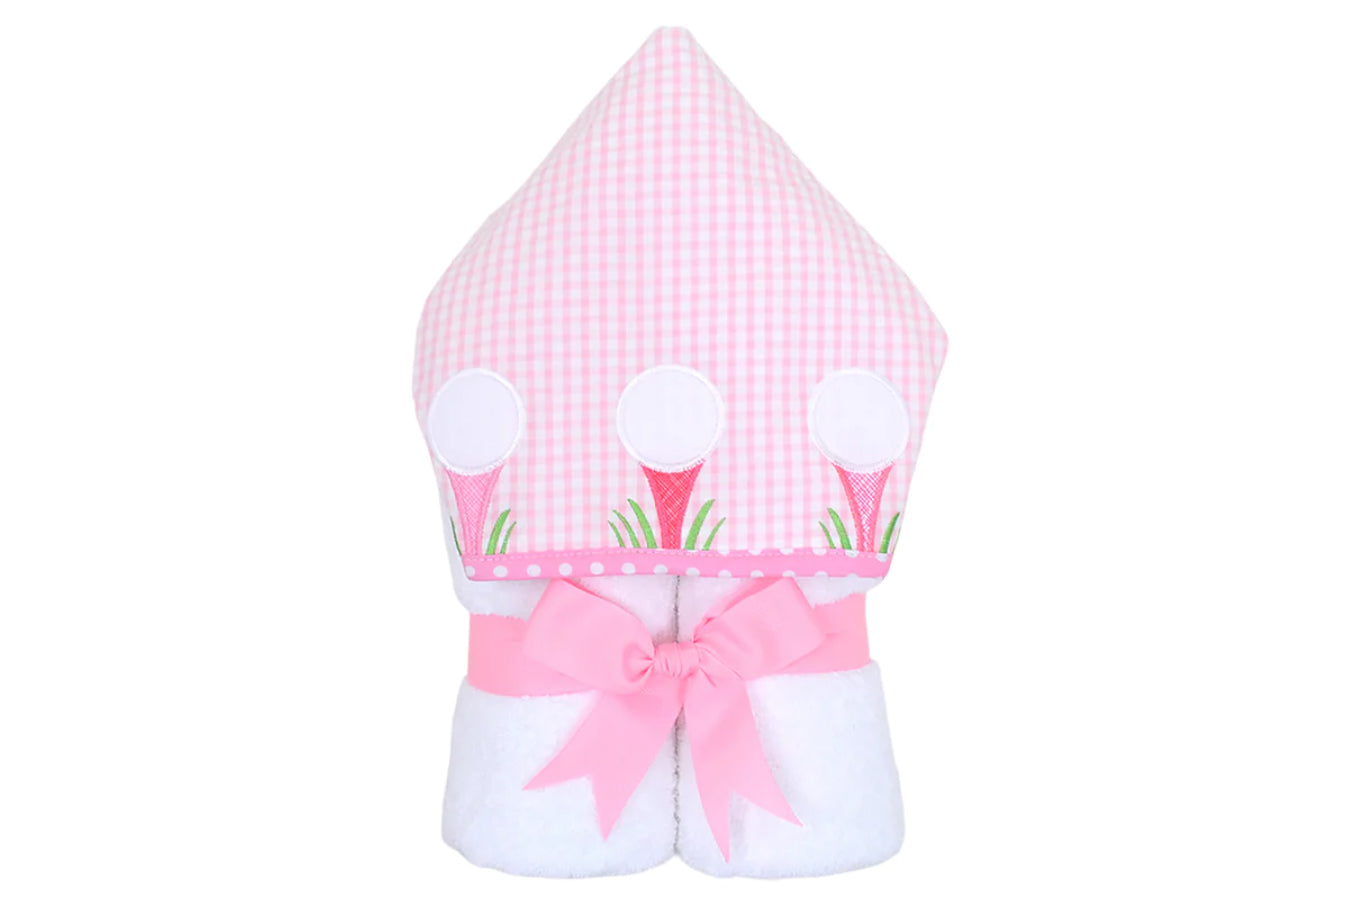 3 Marthas Everyday Kid Hooded Towel - Pink Golf